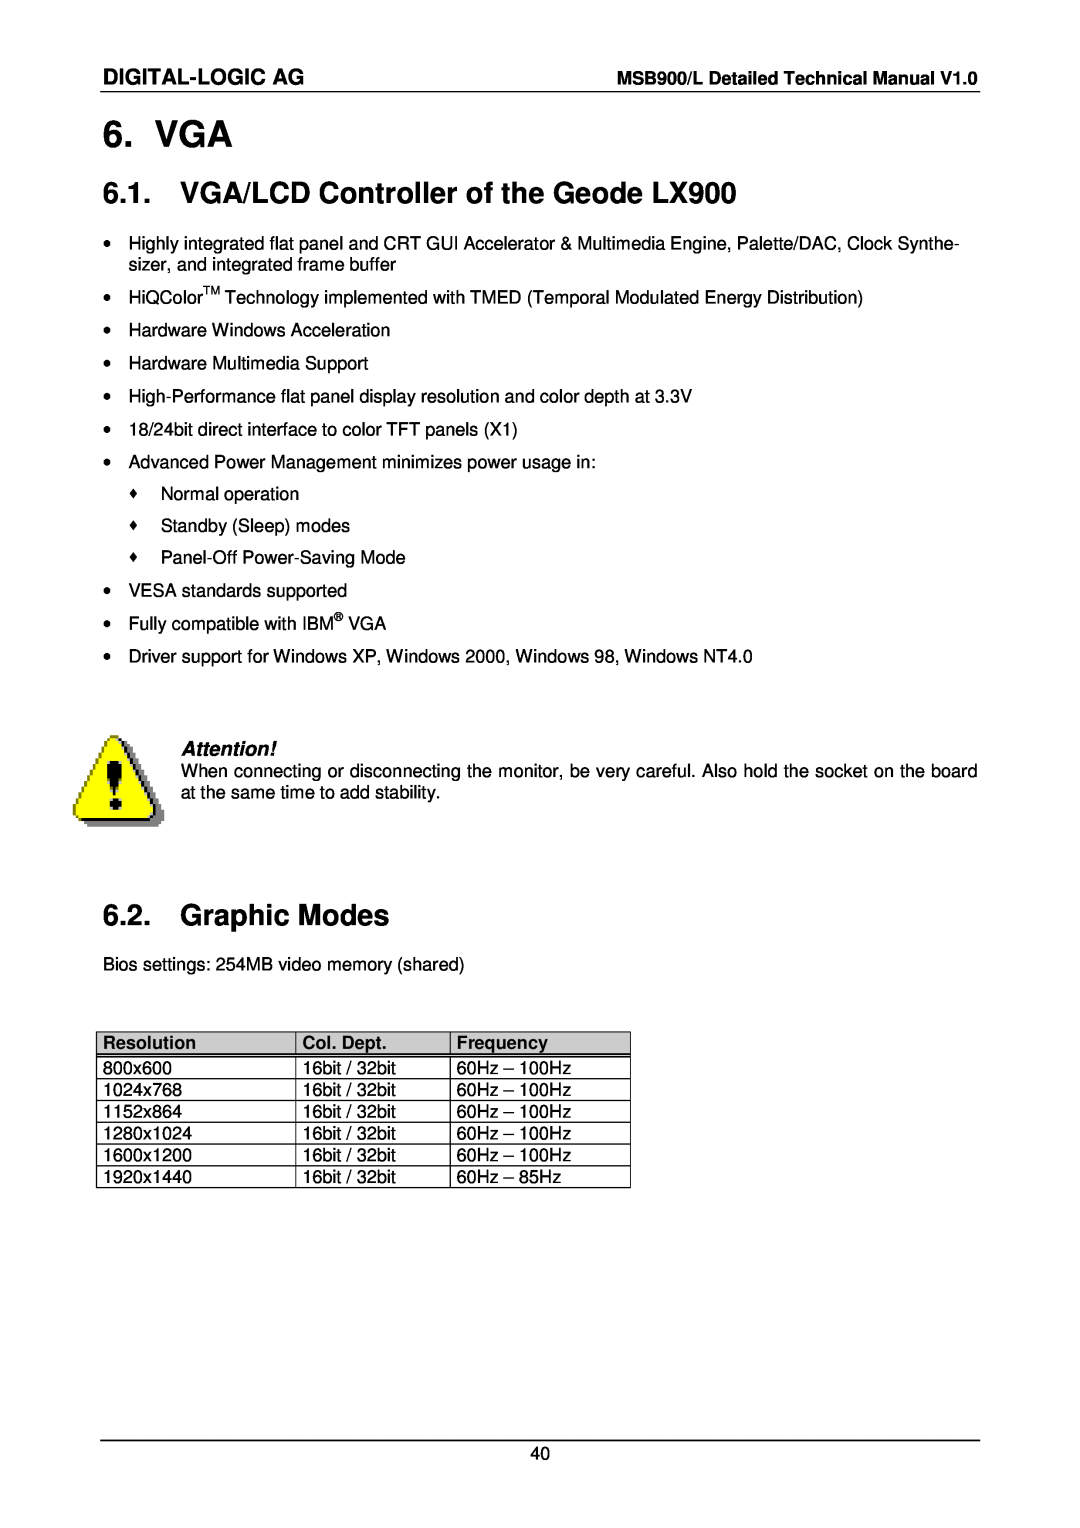 Compaq MSB900L user manual Vga, VGA/LCD Controller of the Geode LX900, Graphic Modes, Digital-Logic Ag 